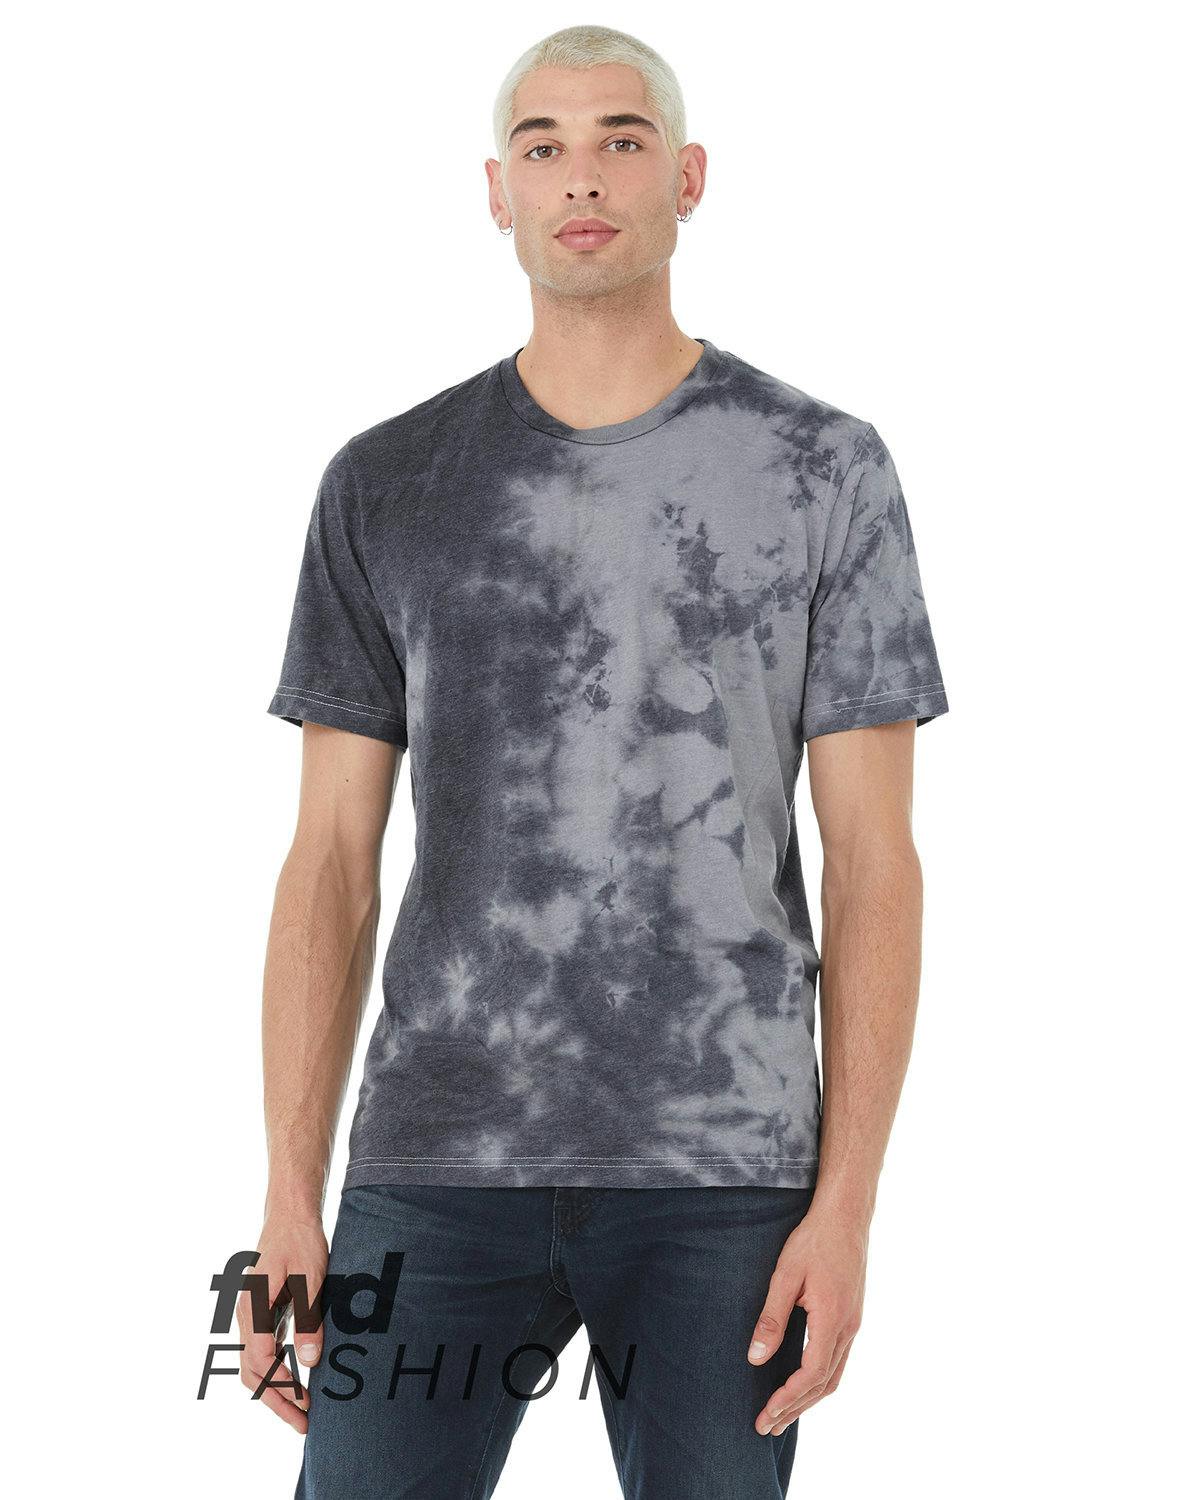 Image for Unisex Tie Dye T-Shirt